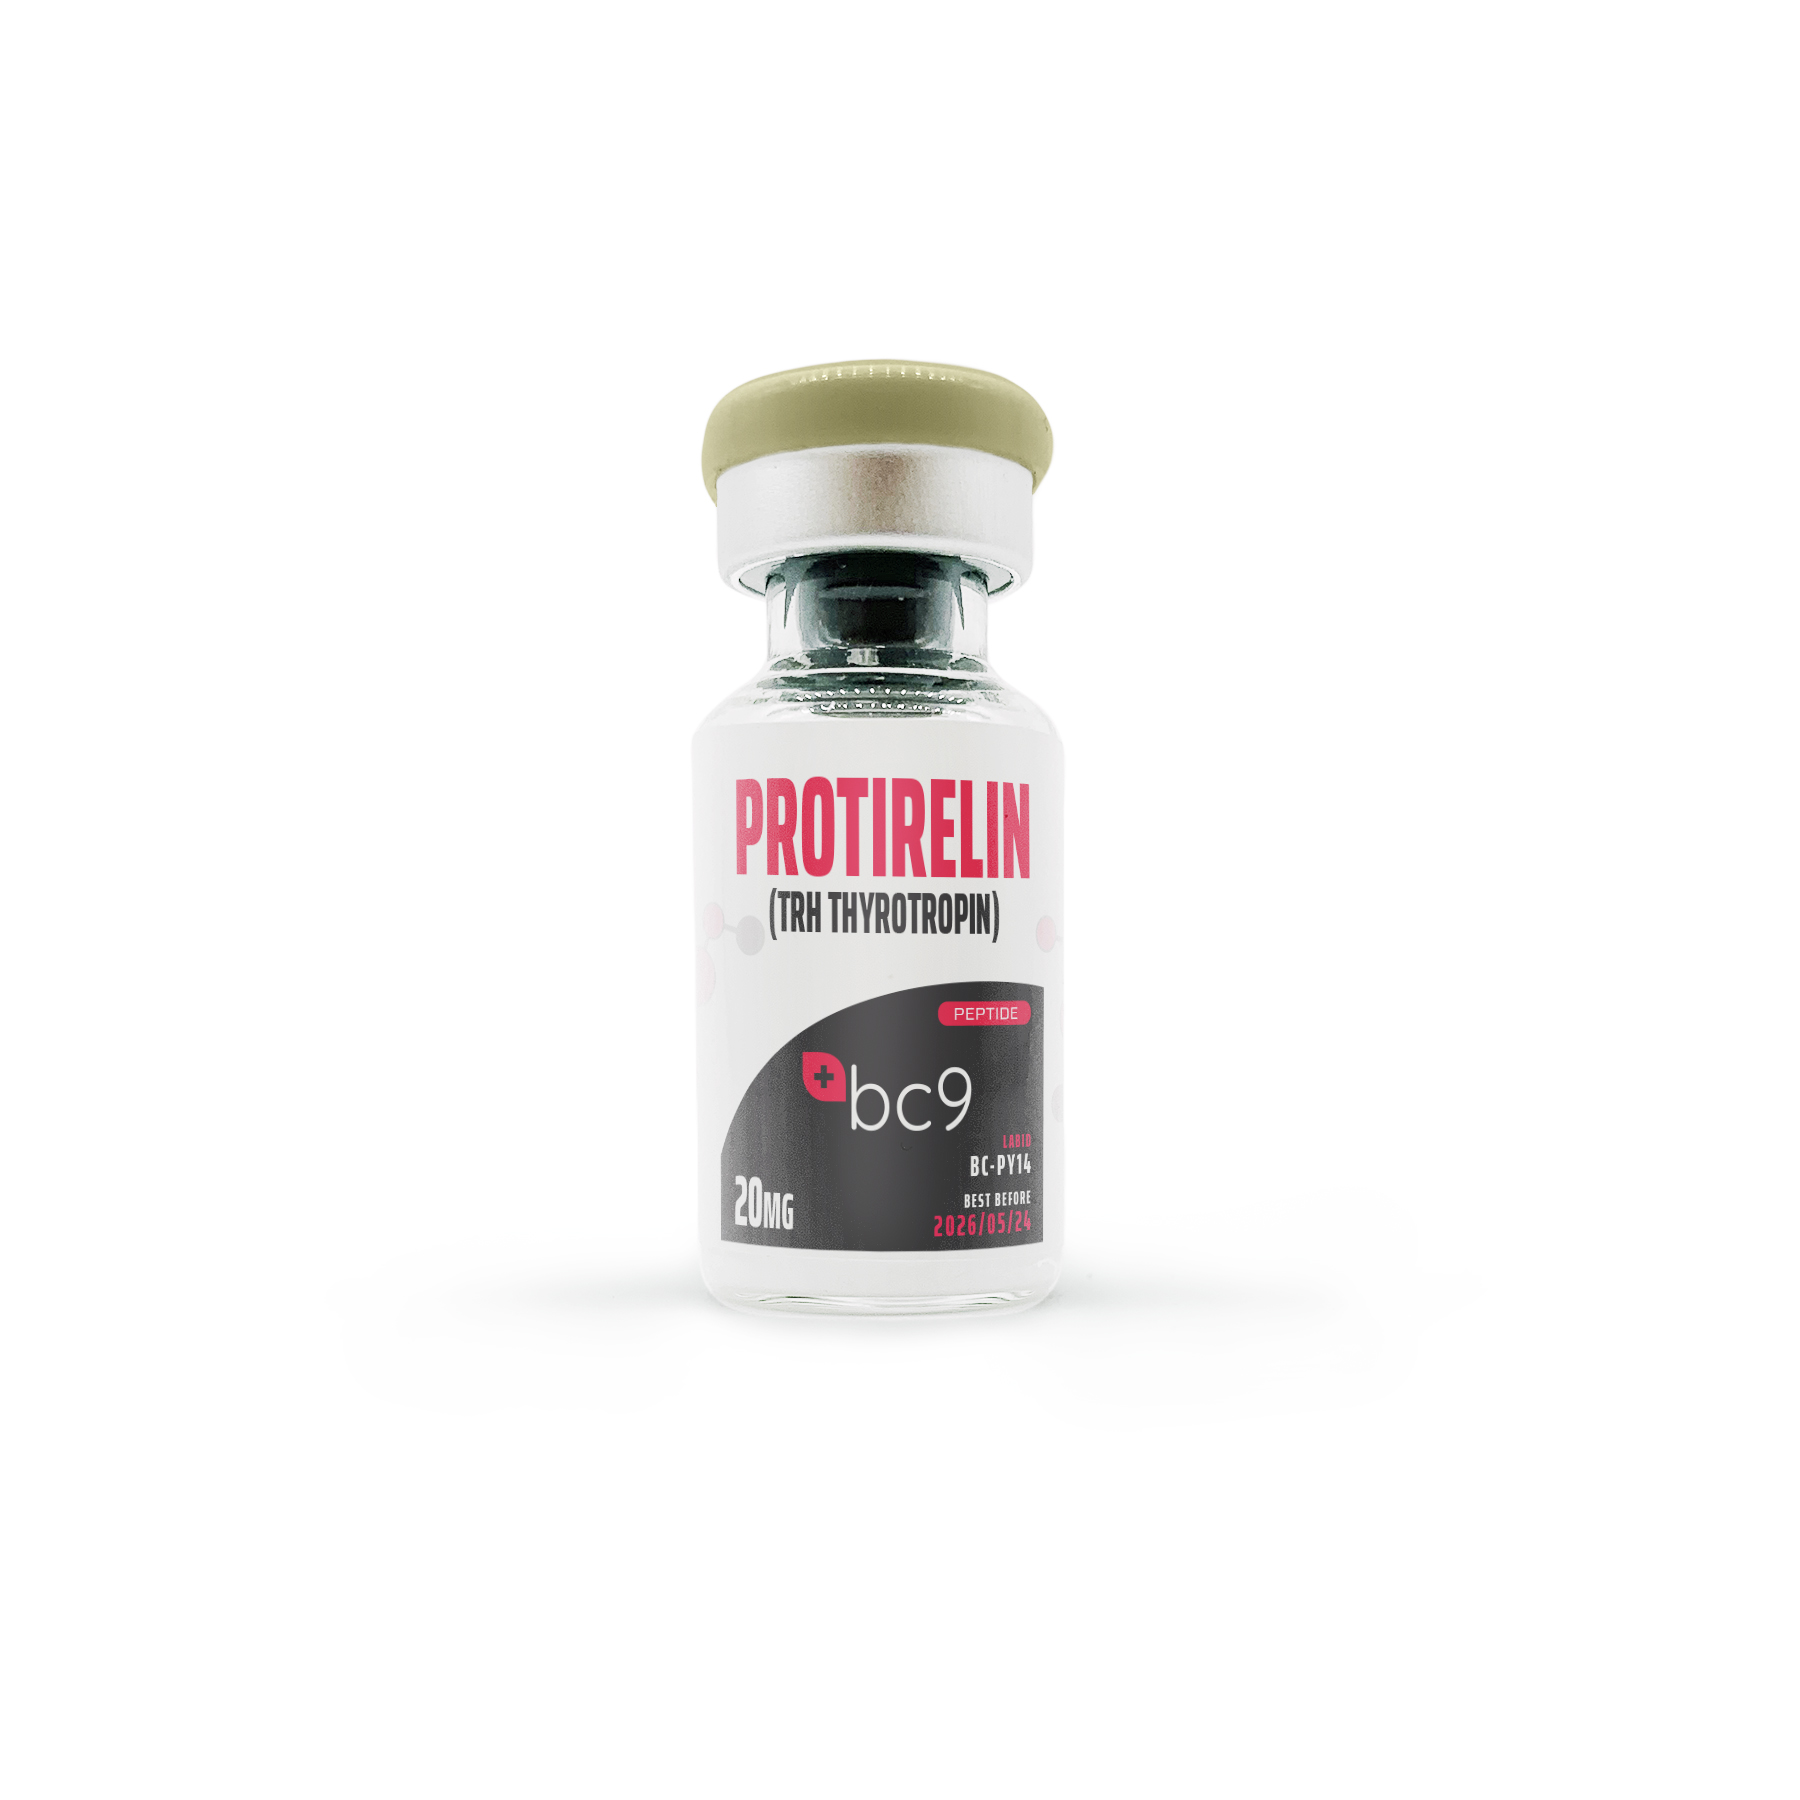 Protirelin (TRH Thyrotropin) Peptide for Sale | BC9.org